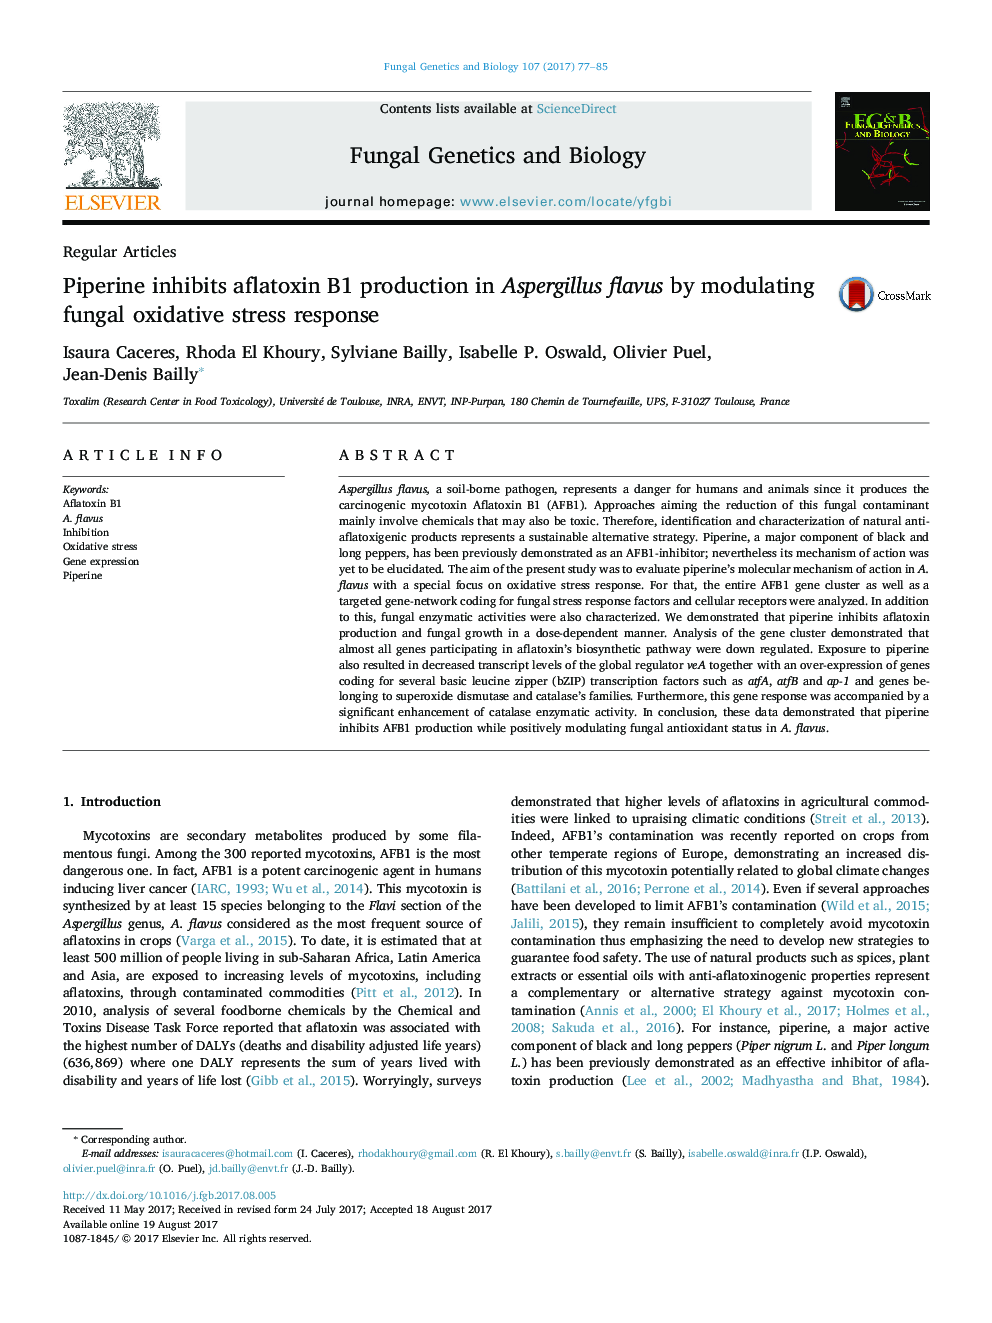 Regular ArticlesPiperine inhibits aflatoxin B1 production in Aspergillus flavus by modulating fungal oxidative stress response